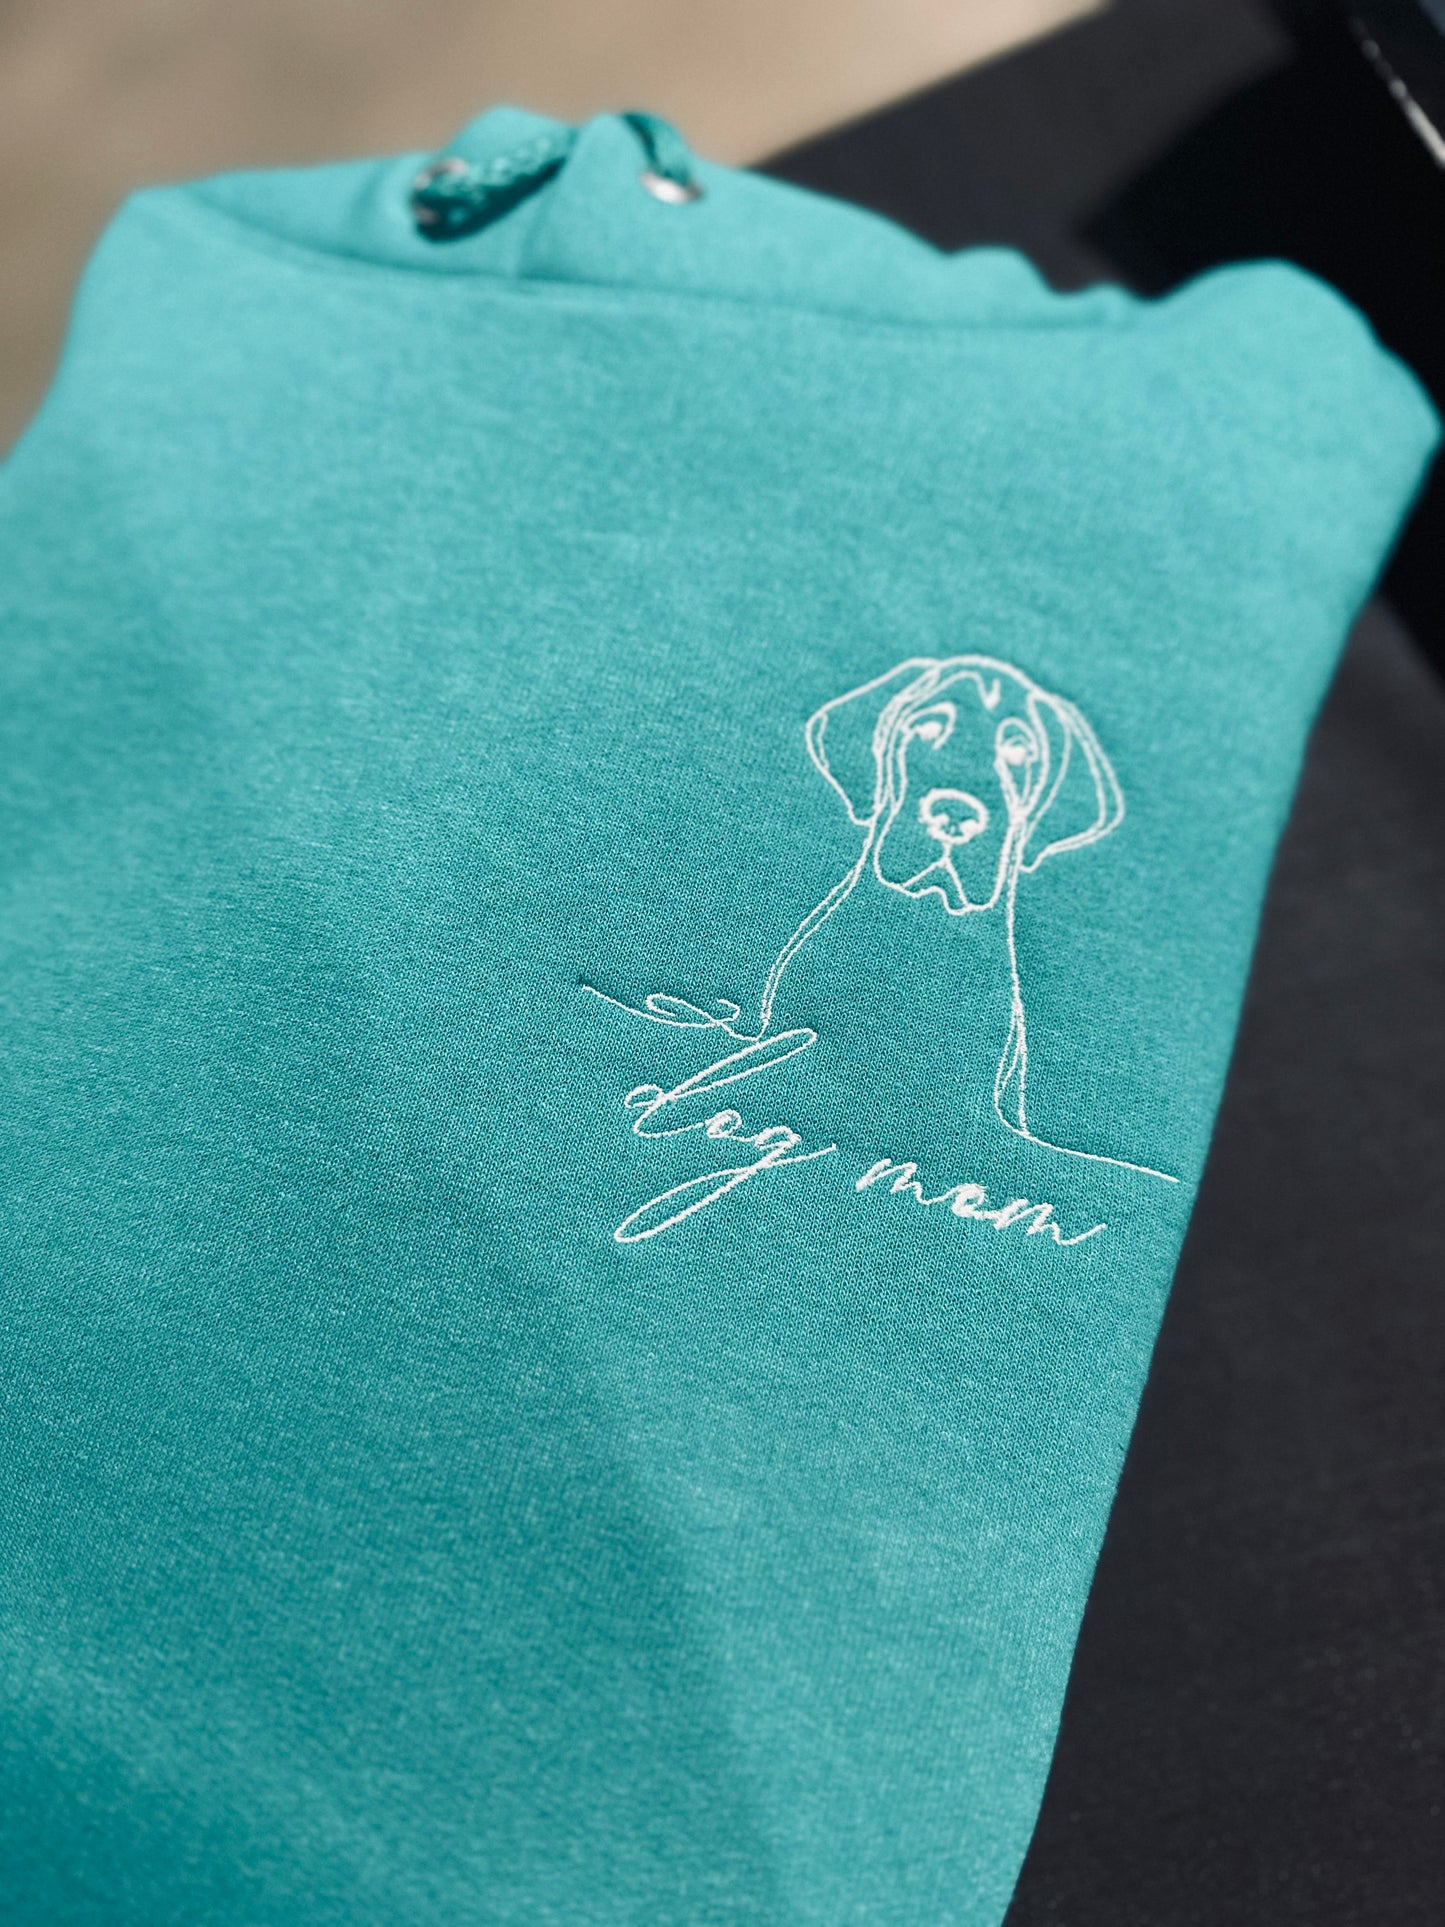 Dog Mom Embroidered Sweatshirt (read description before ordering)